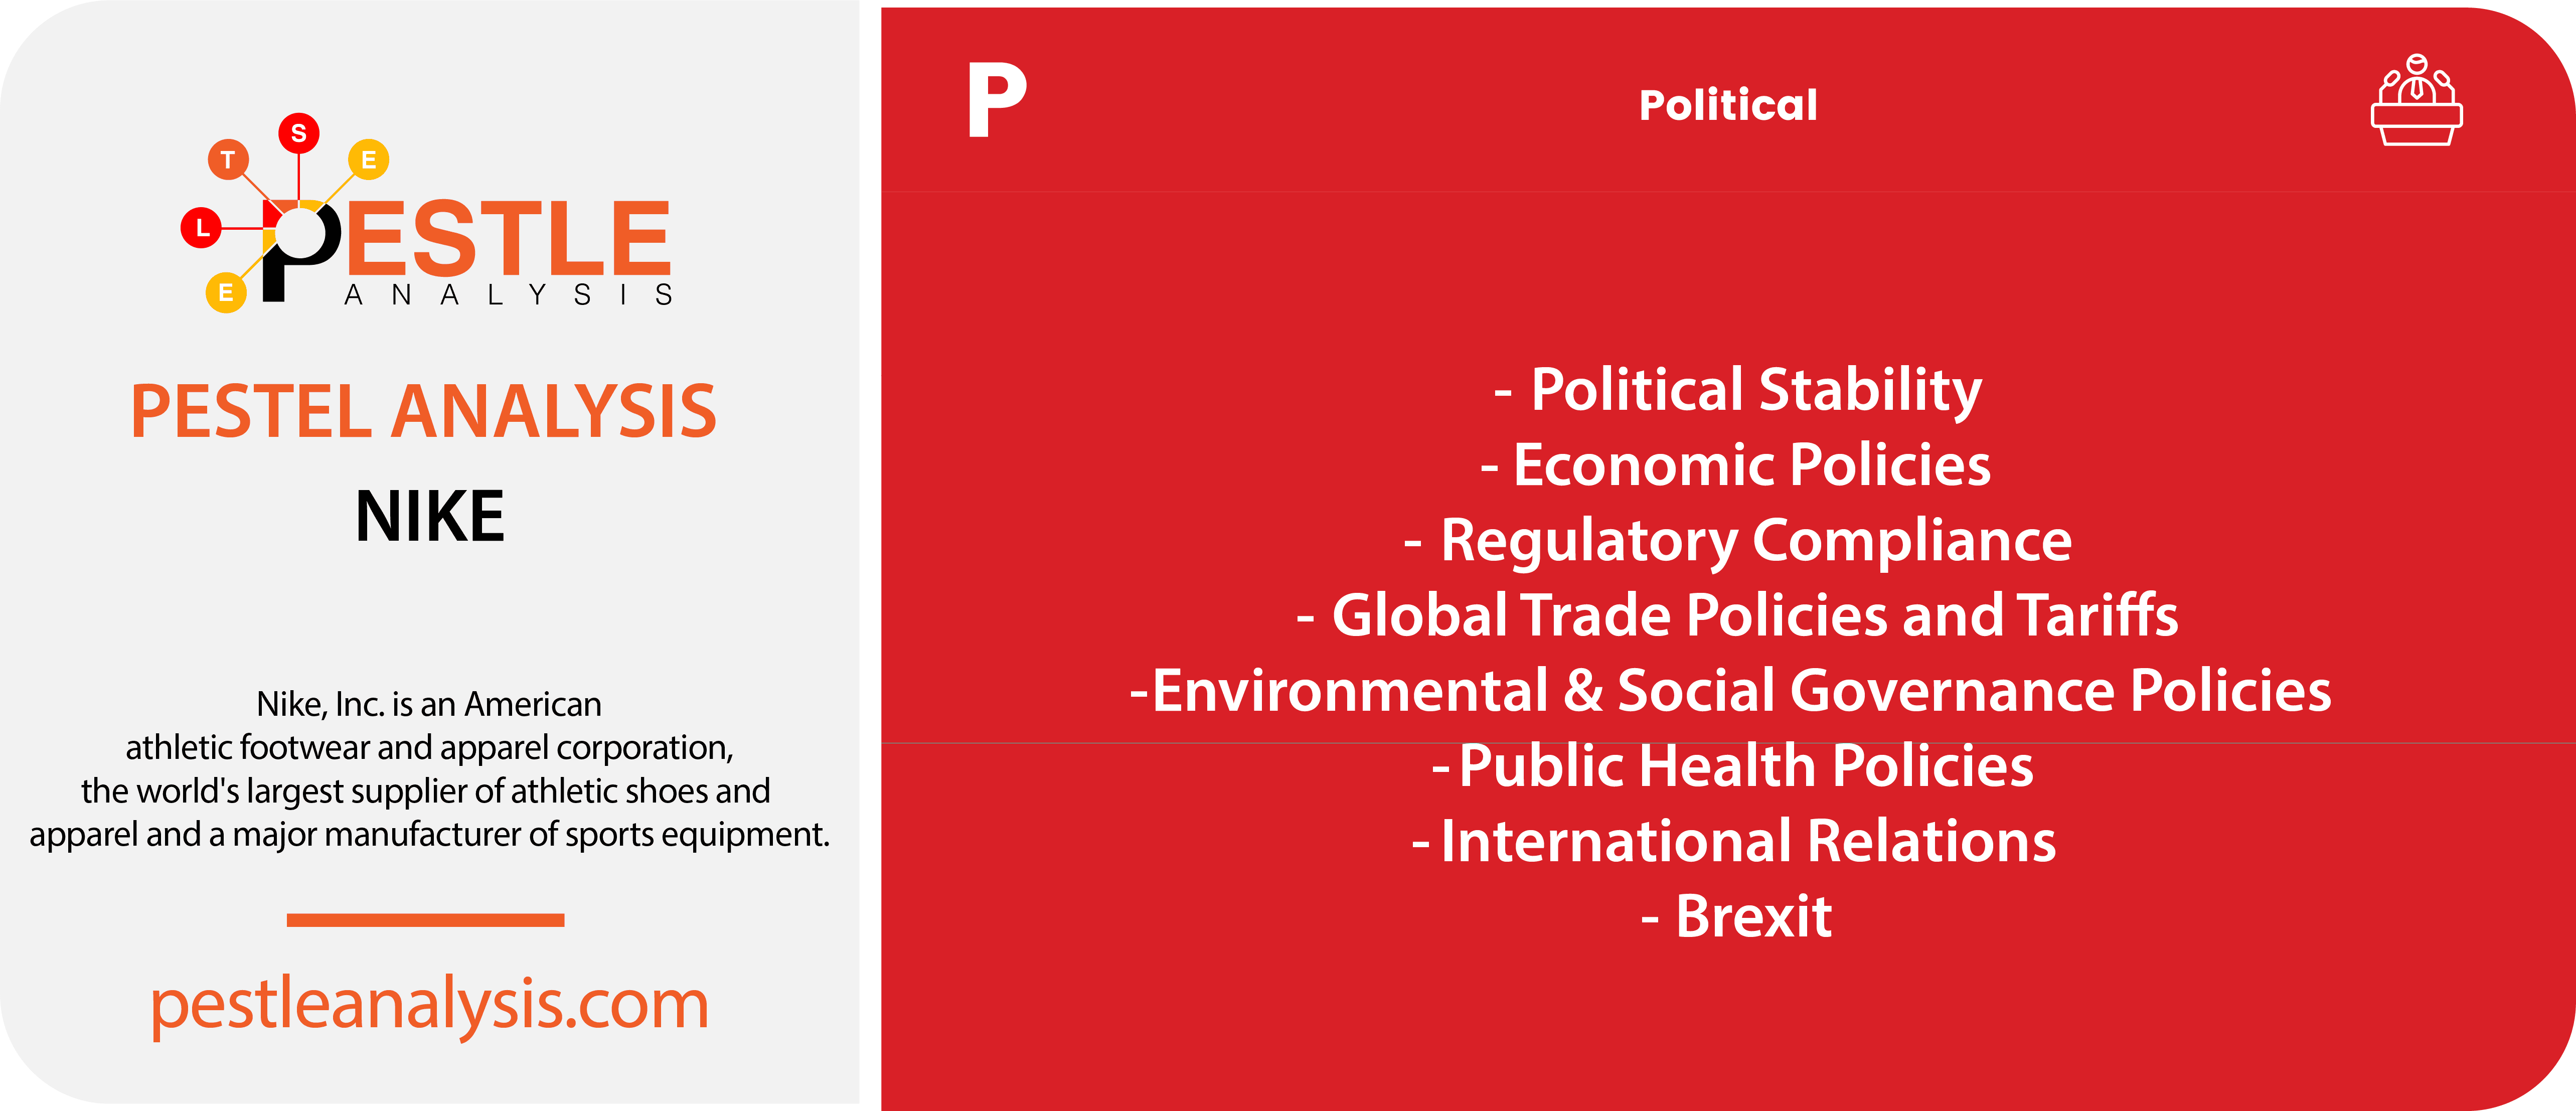 nike-pestle-analysis-political-factors-template